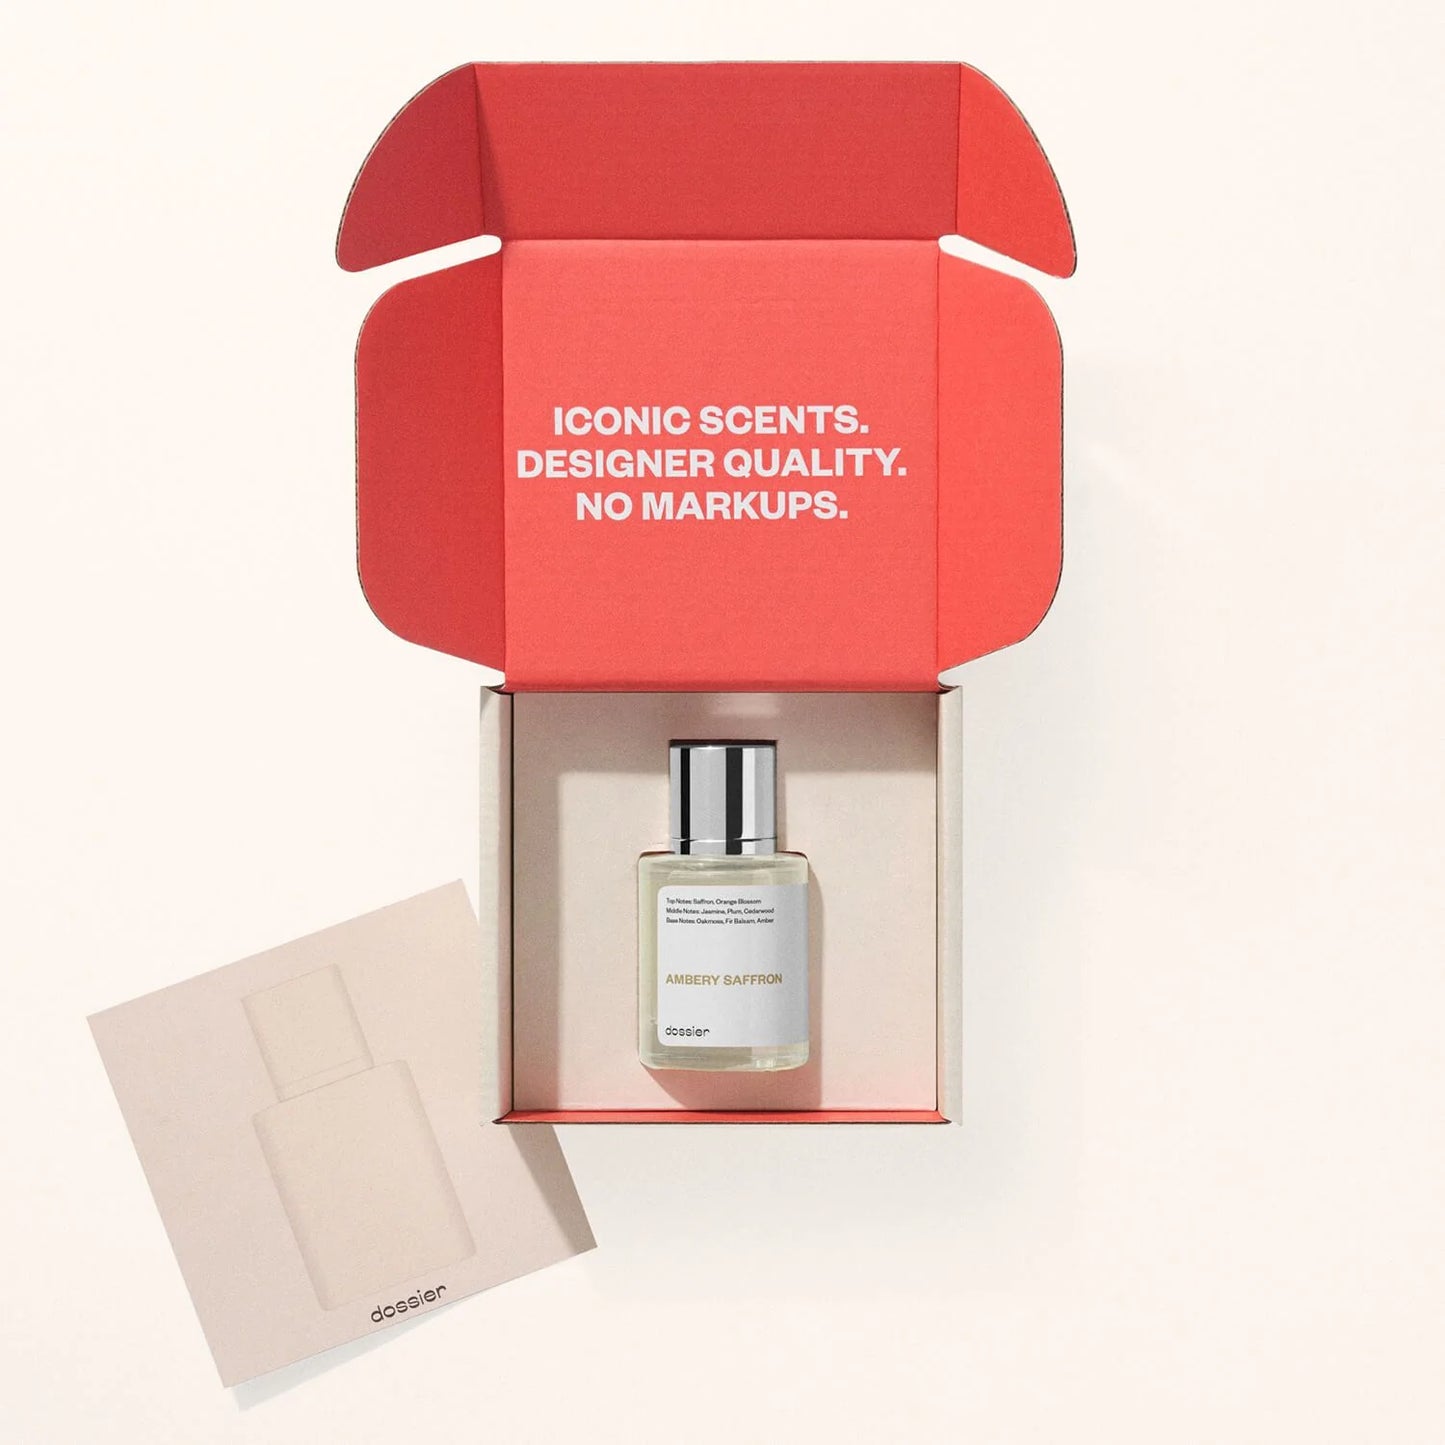 Dossier Ambery Saffron Eau de Parfum Inspired by MFK's Baccarat Rouge 540 50 ml